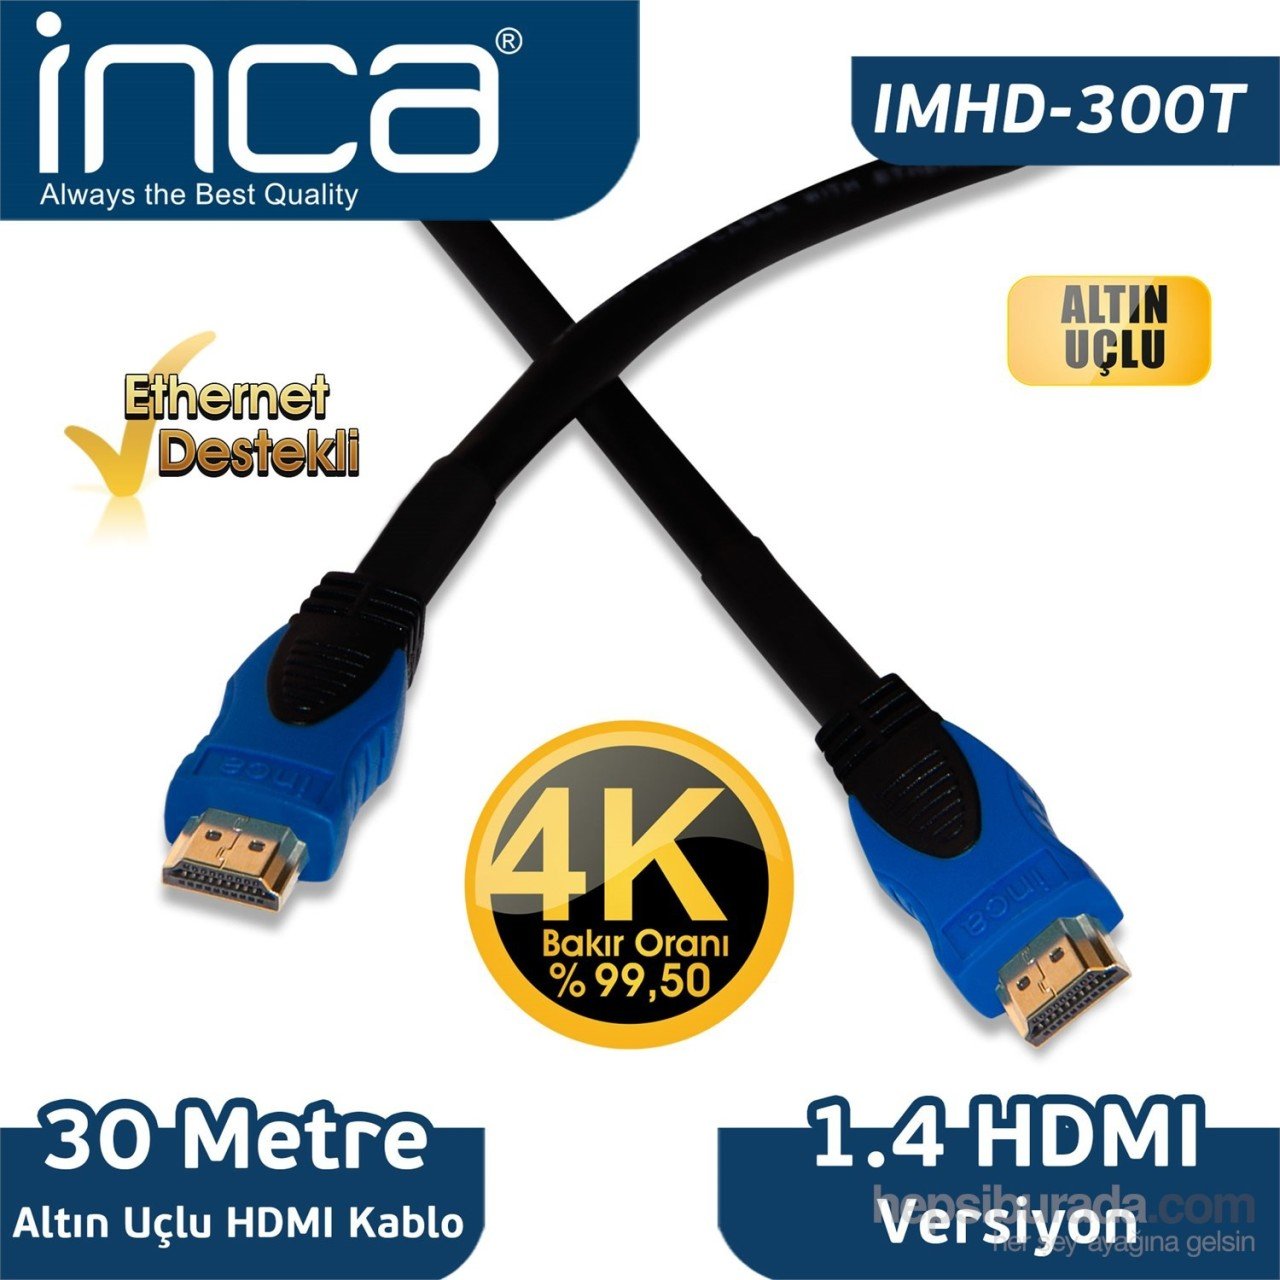 INCA 30 MT HDMI KABLO IMHD-300T